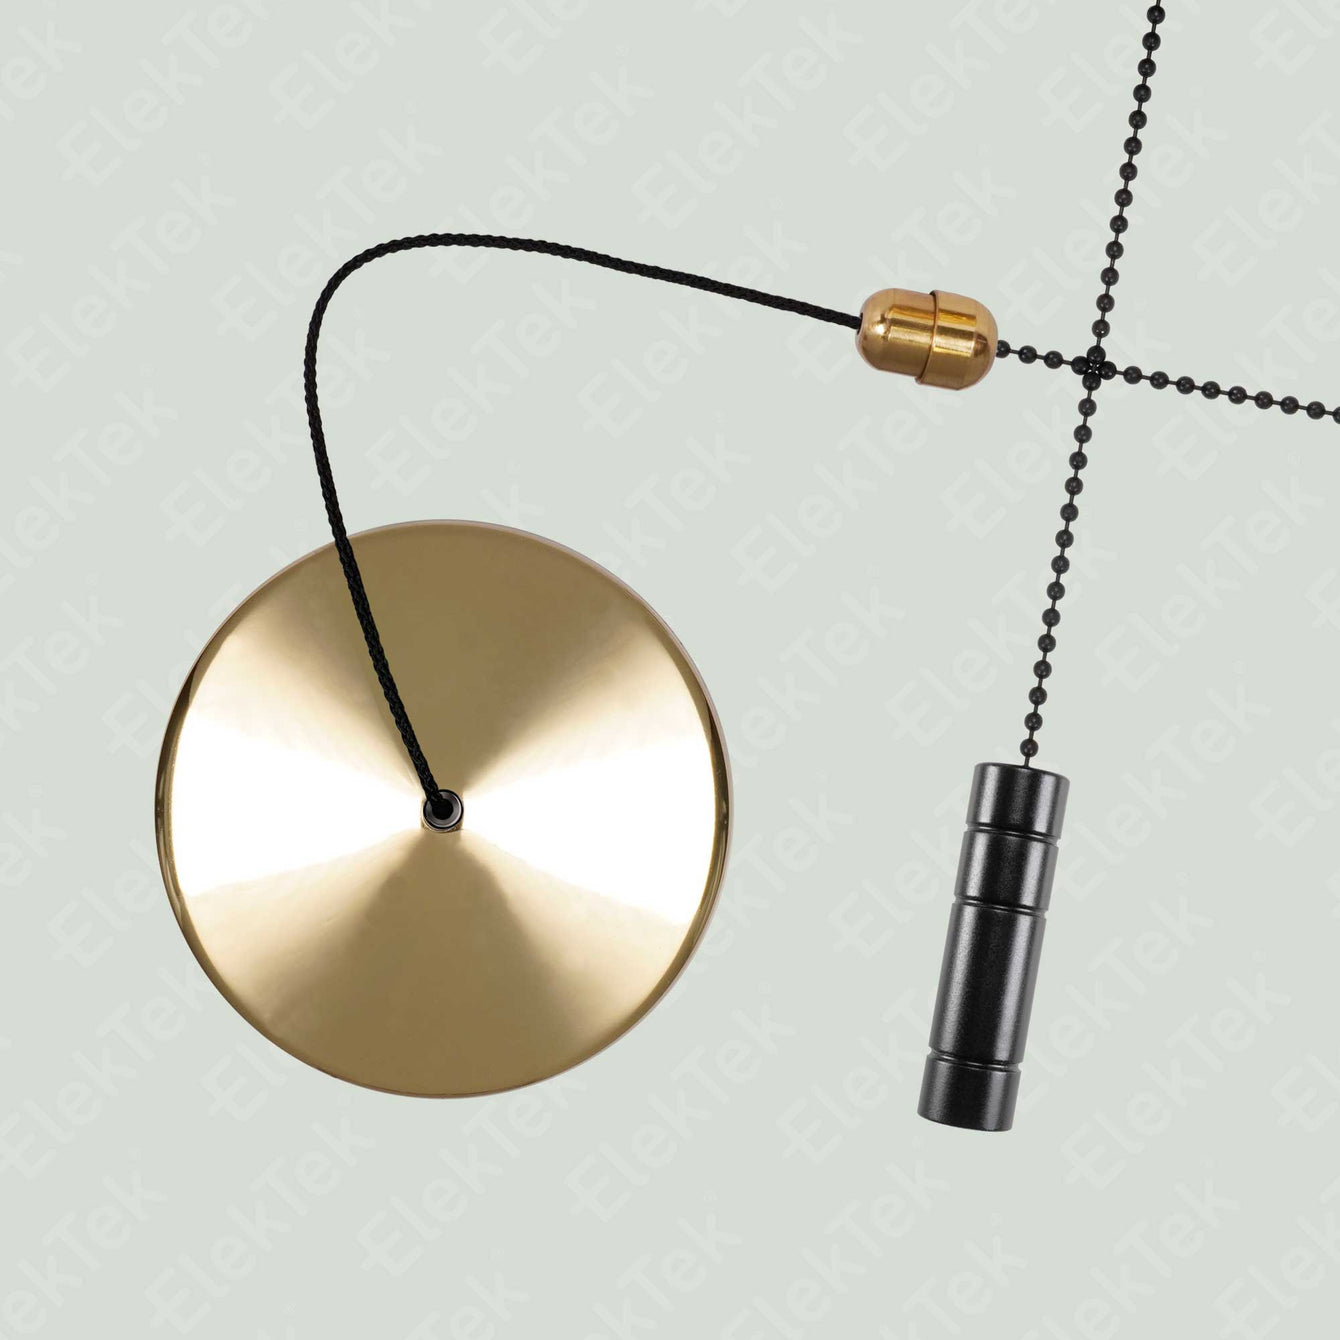 ElekTek Premium Brass Bathroom Light Pull Cord Switch Kit with Pull Chain Handle 